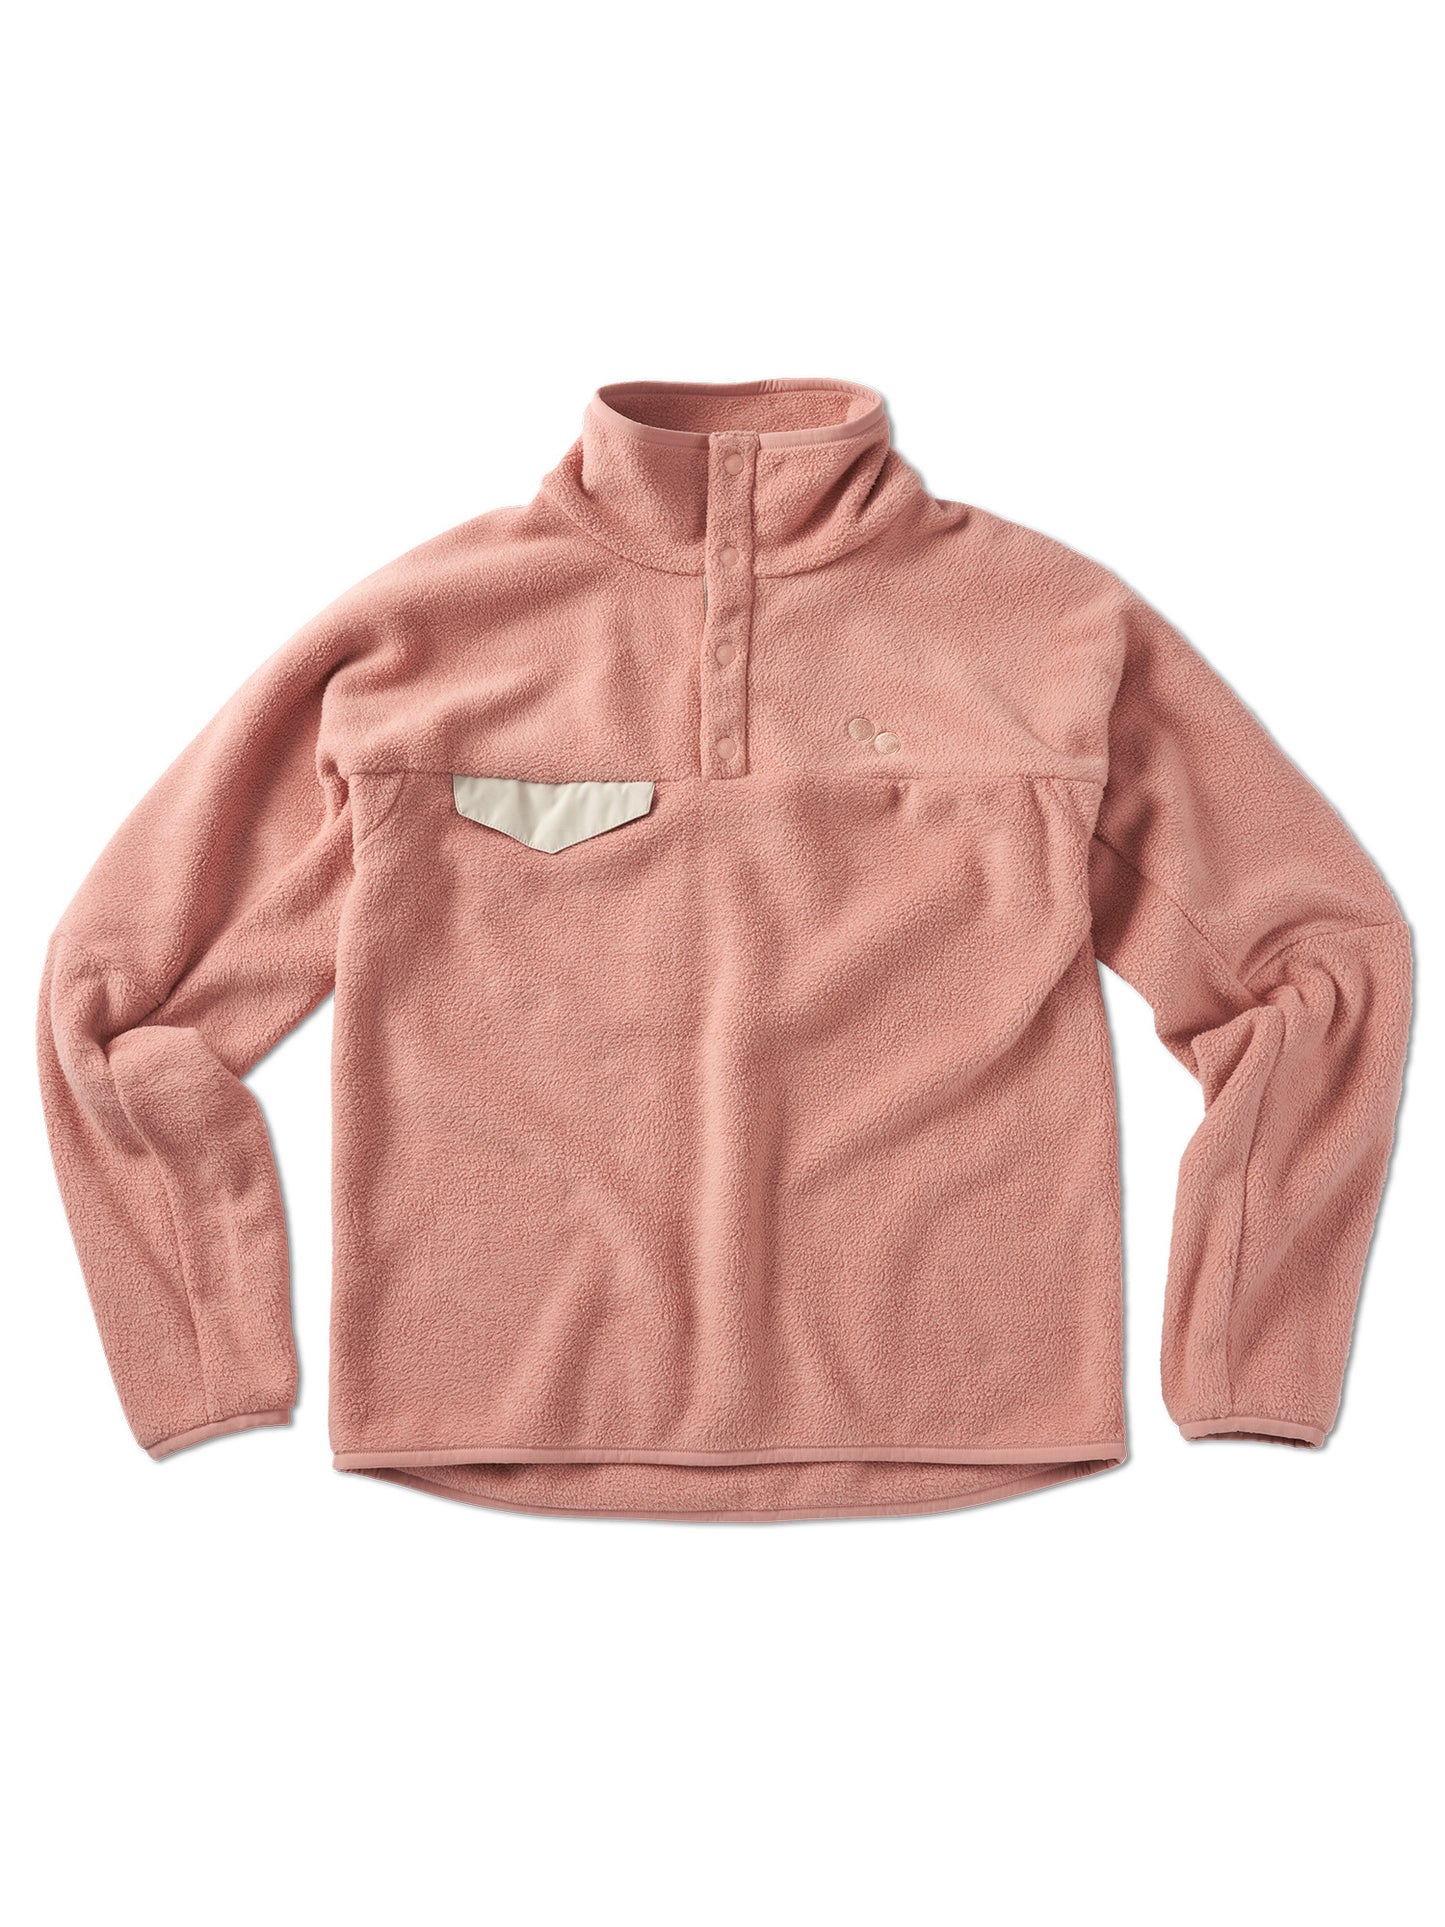 pinqponq-Fleece-Pullover-Unisex-Ash-Pink-front